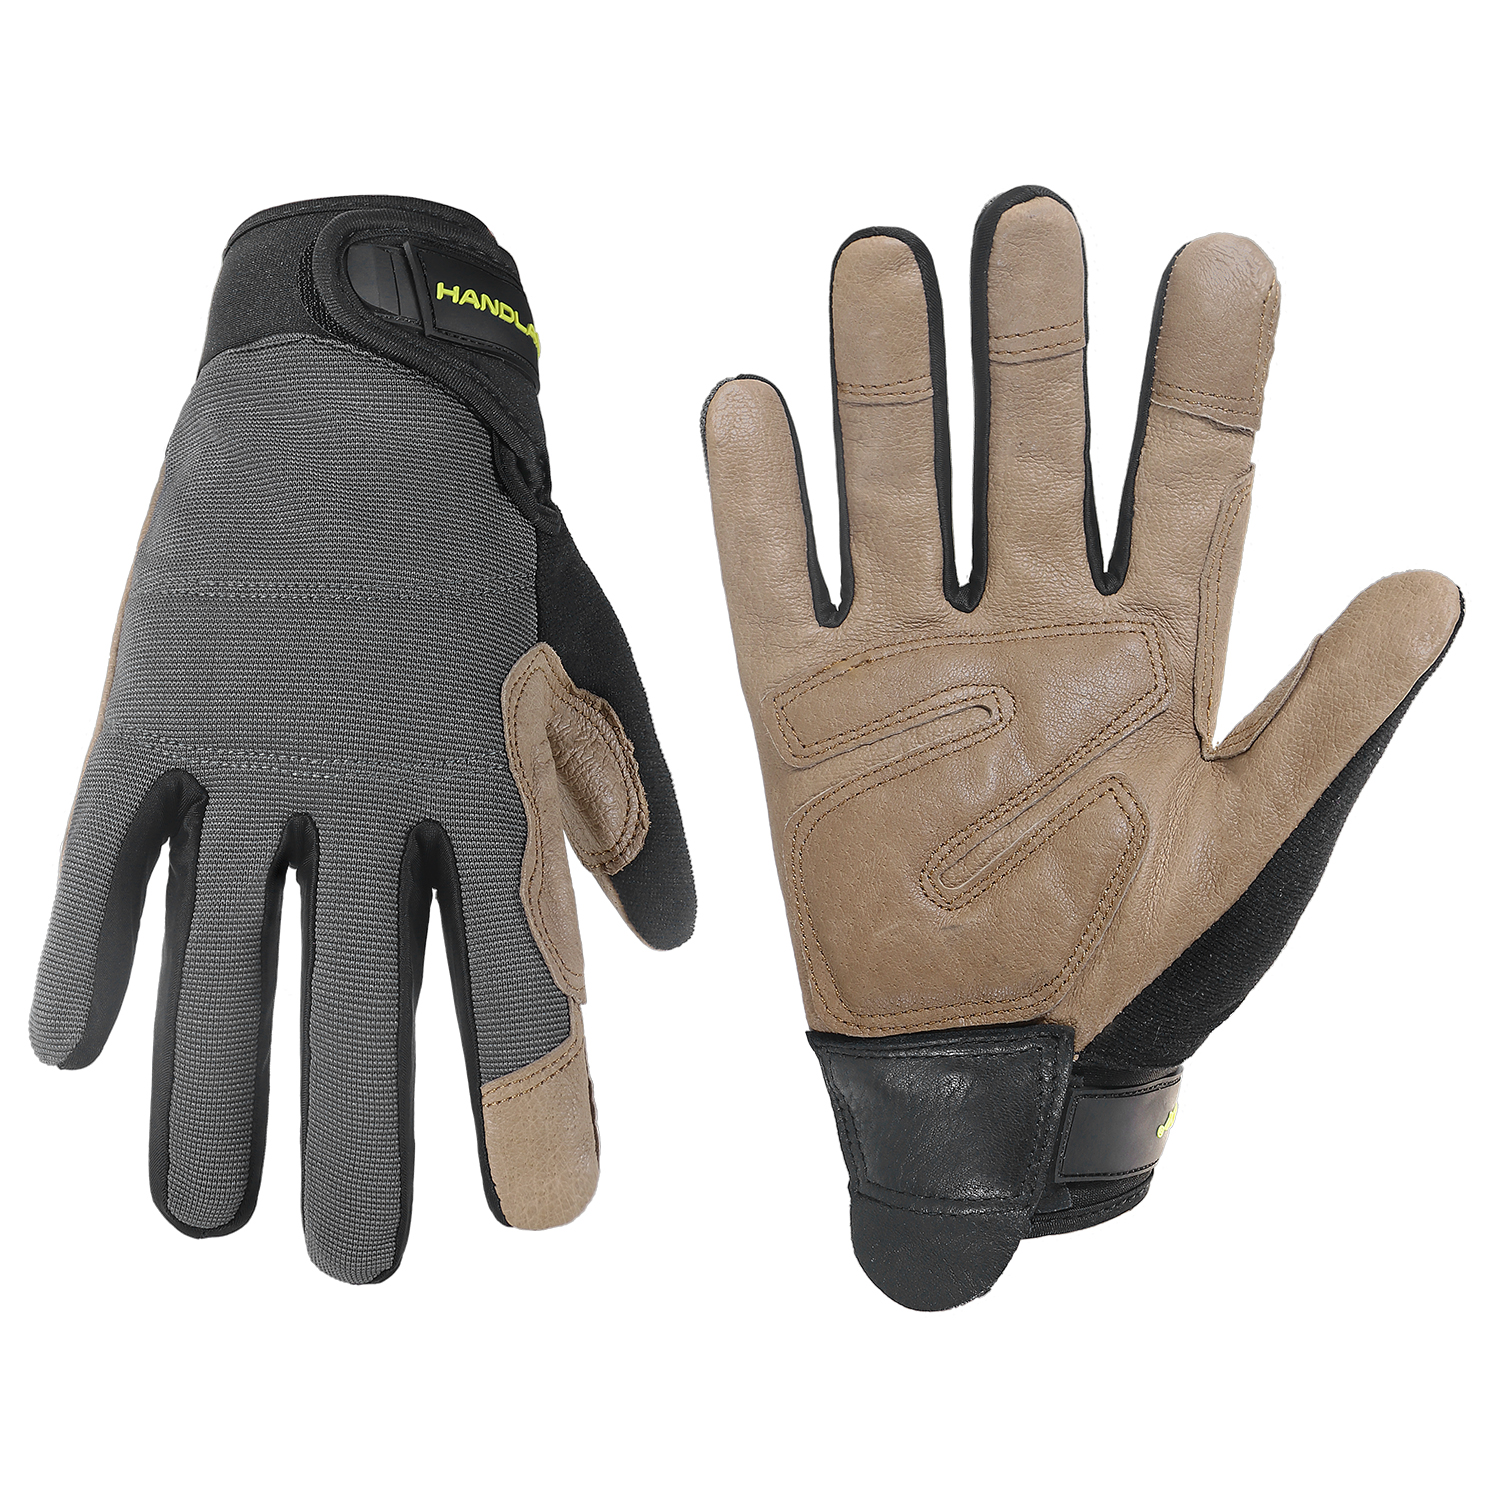 Double Type Work Gloves, Cut Resistant Gloves Professional Work Gloves  Gardening Gloves Men Women Construction Handling Lumberjack Auto Mechanic  (XL)